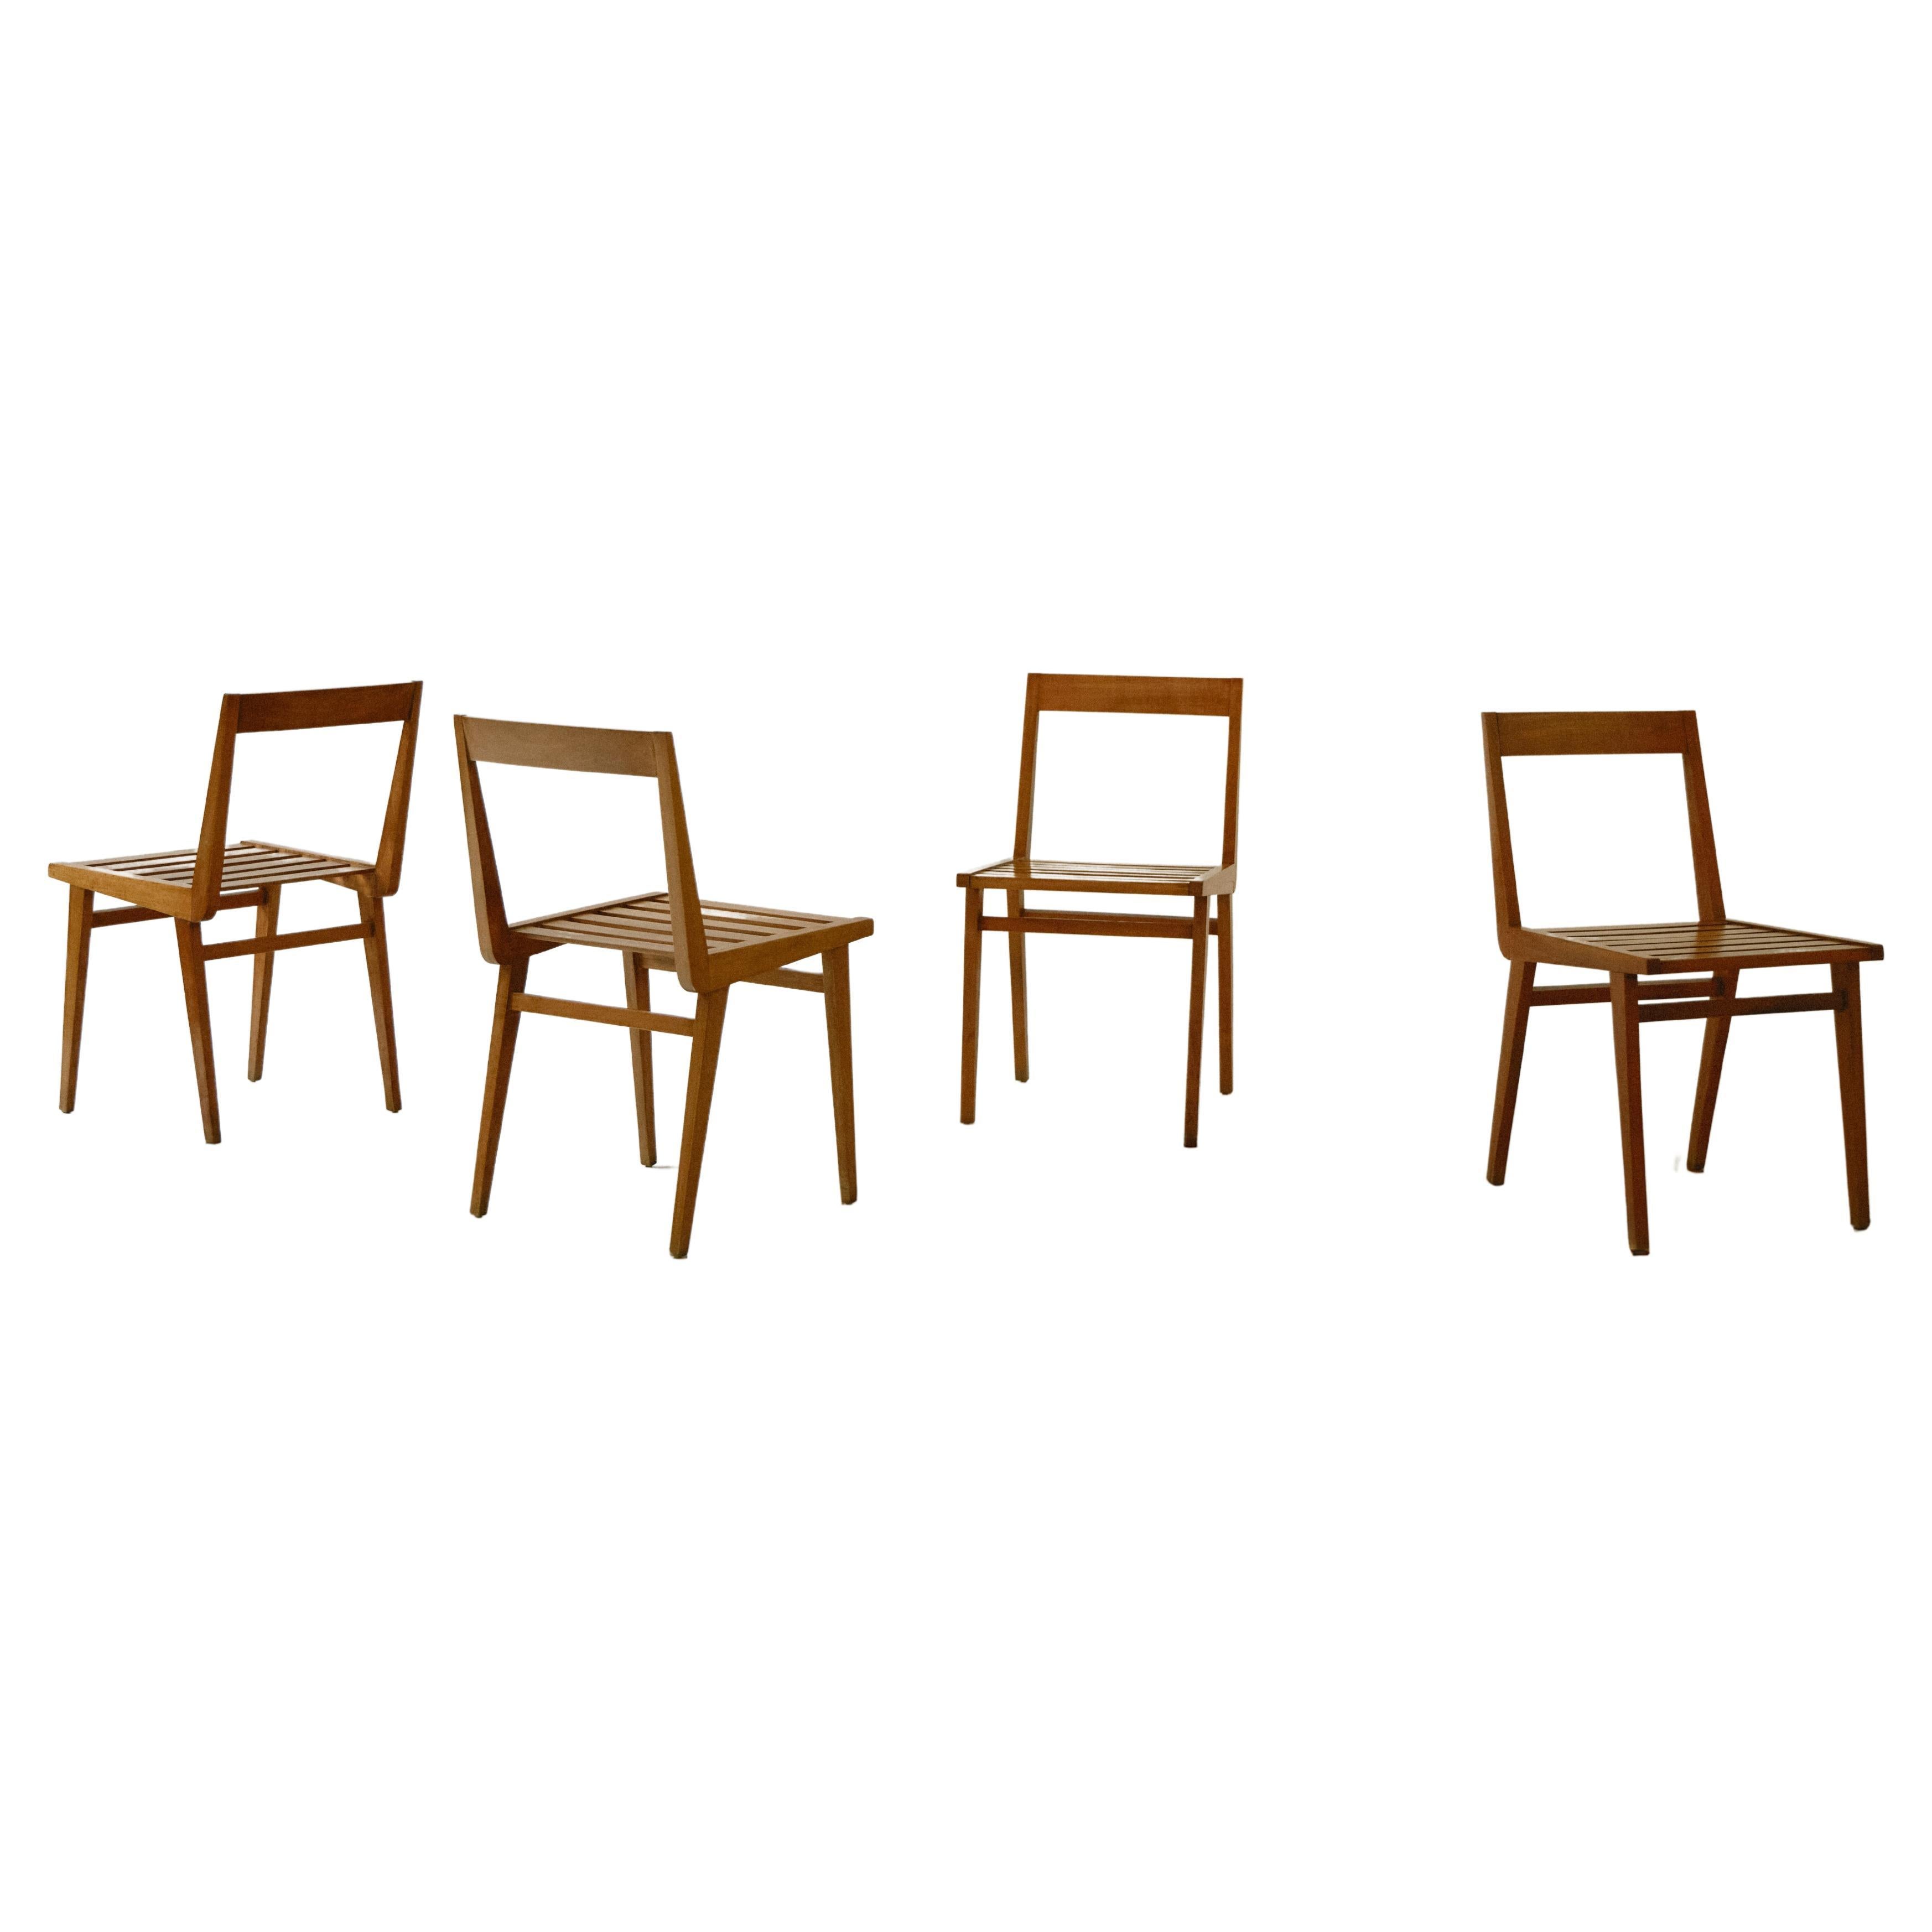 Set of 4 Slatted Dining Chair by Joaquim Tenreiro